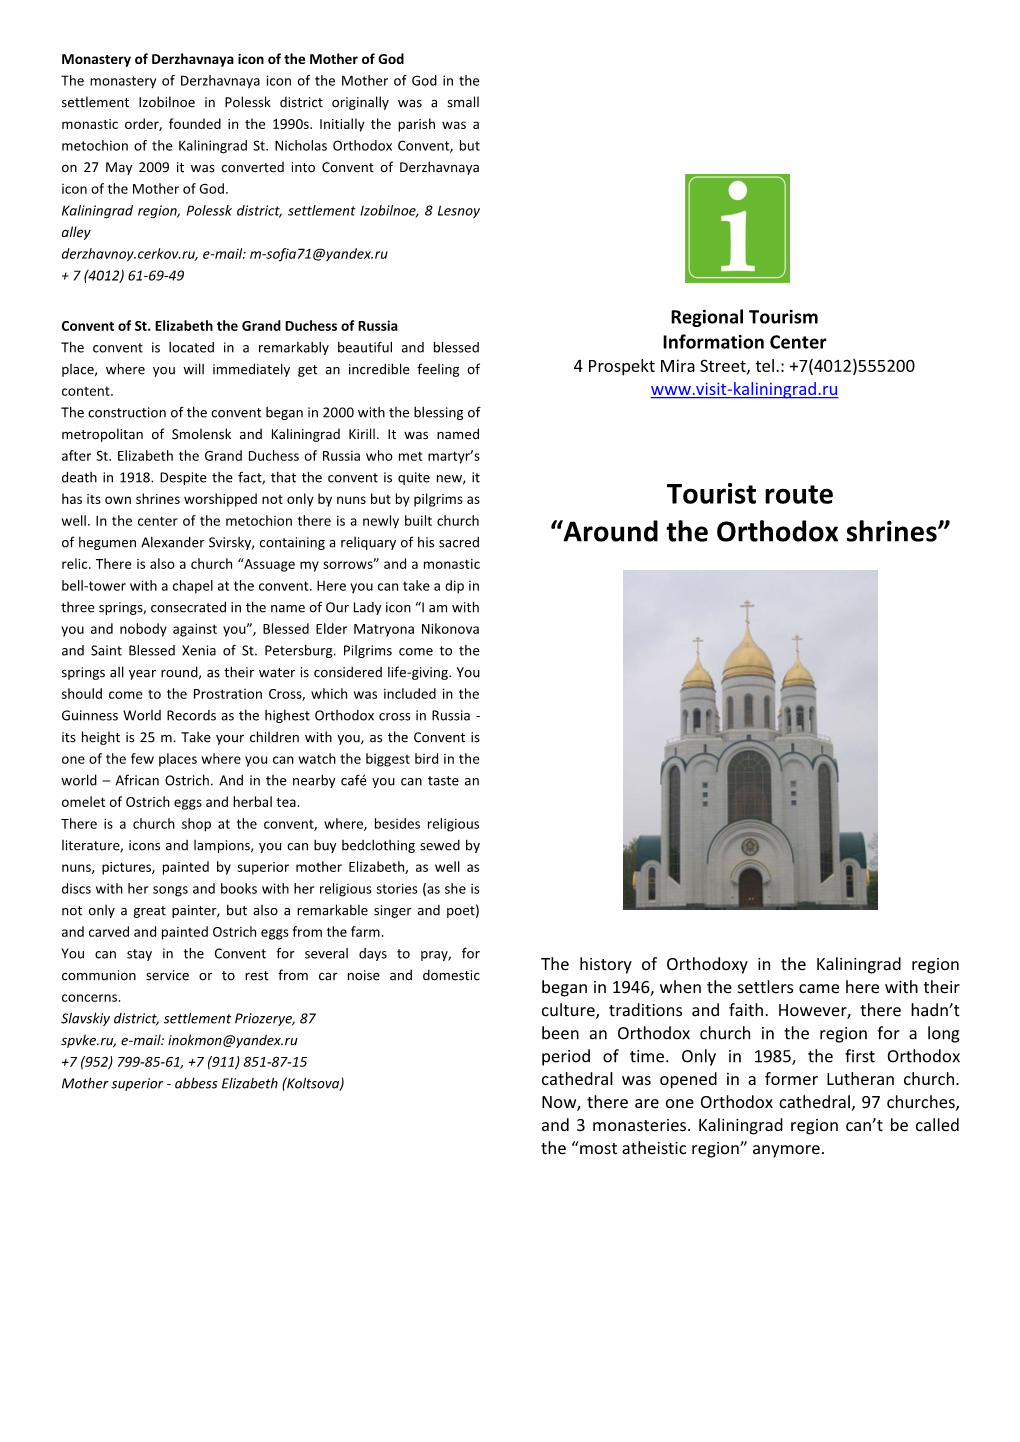 Tourist Route “Around the Orthodox Shrines”